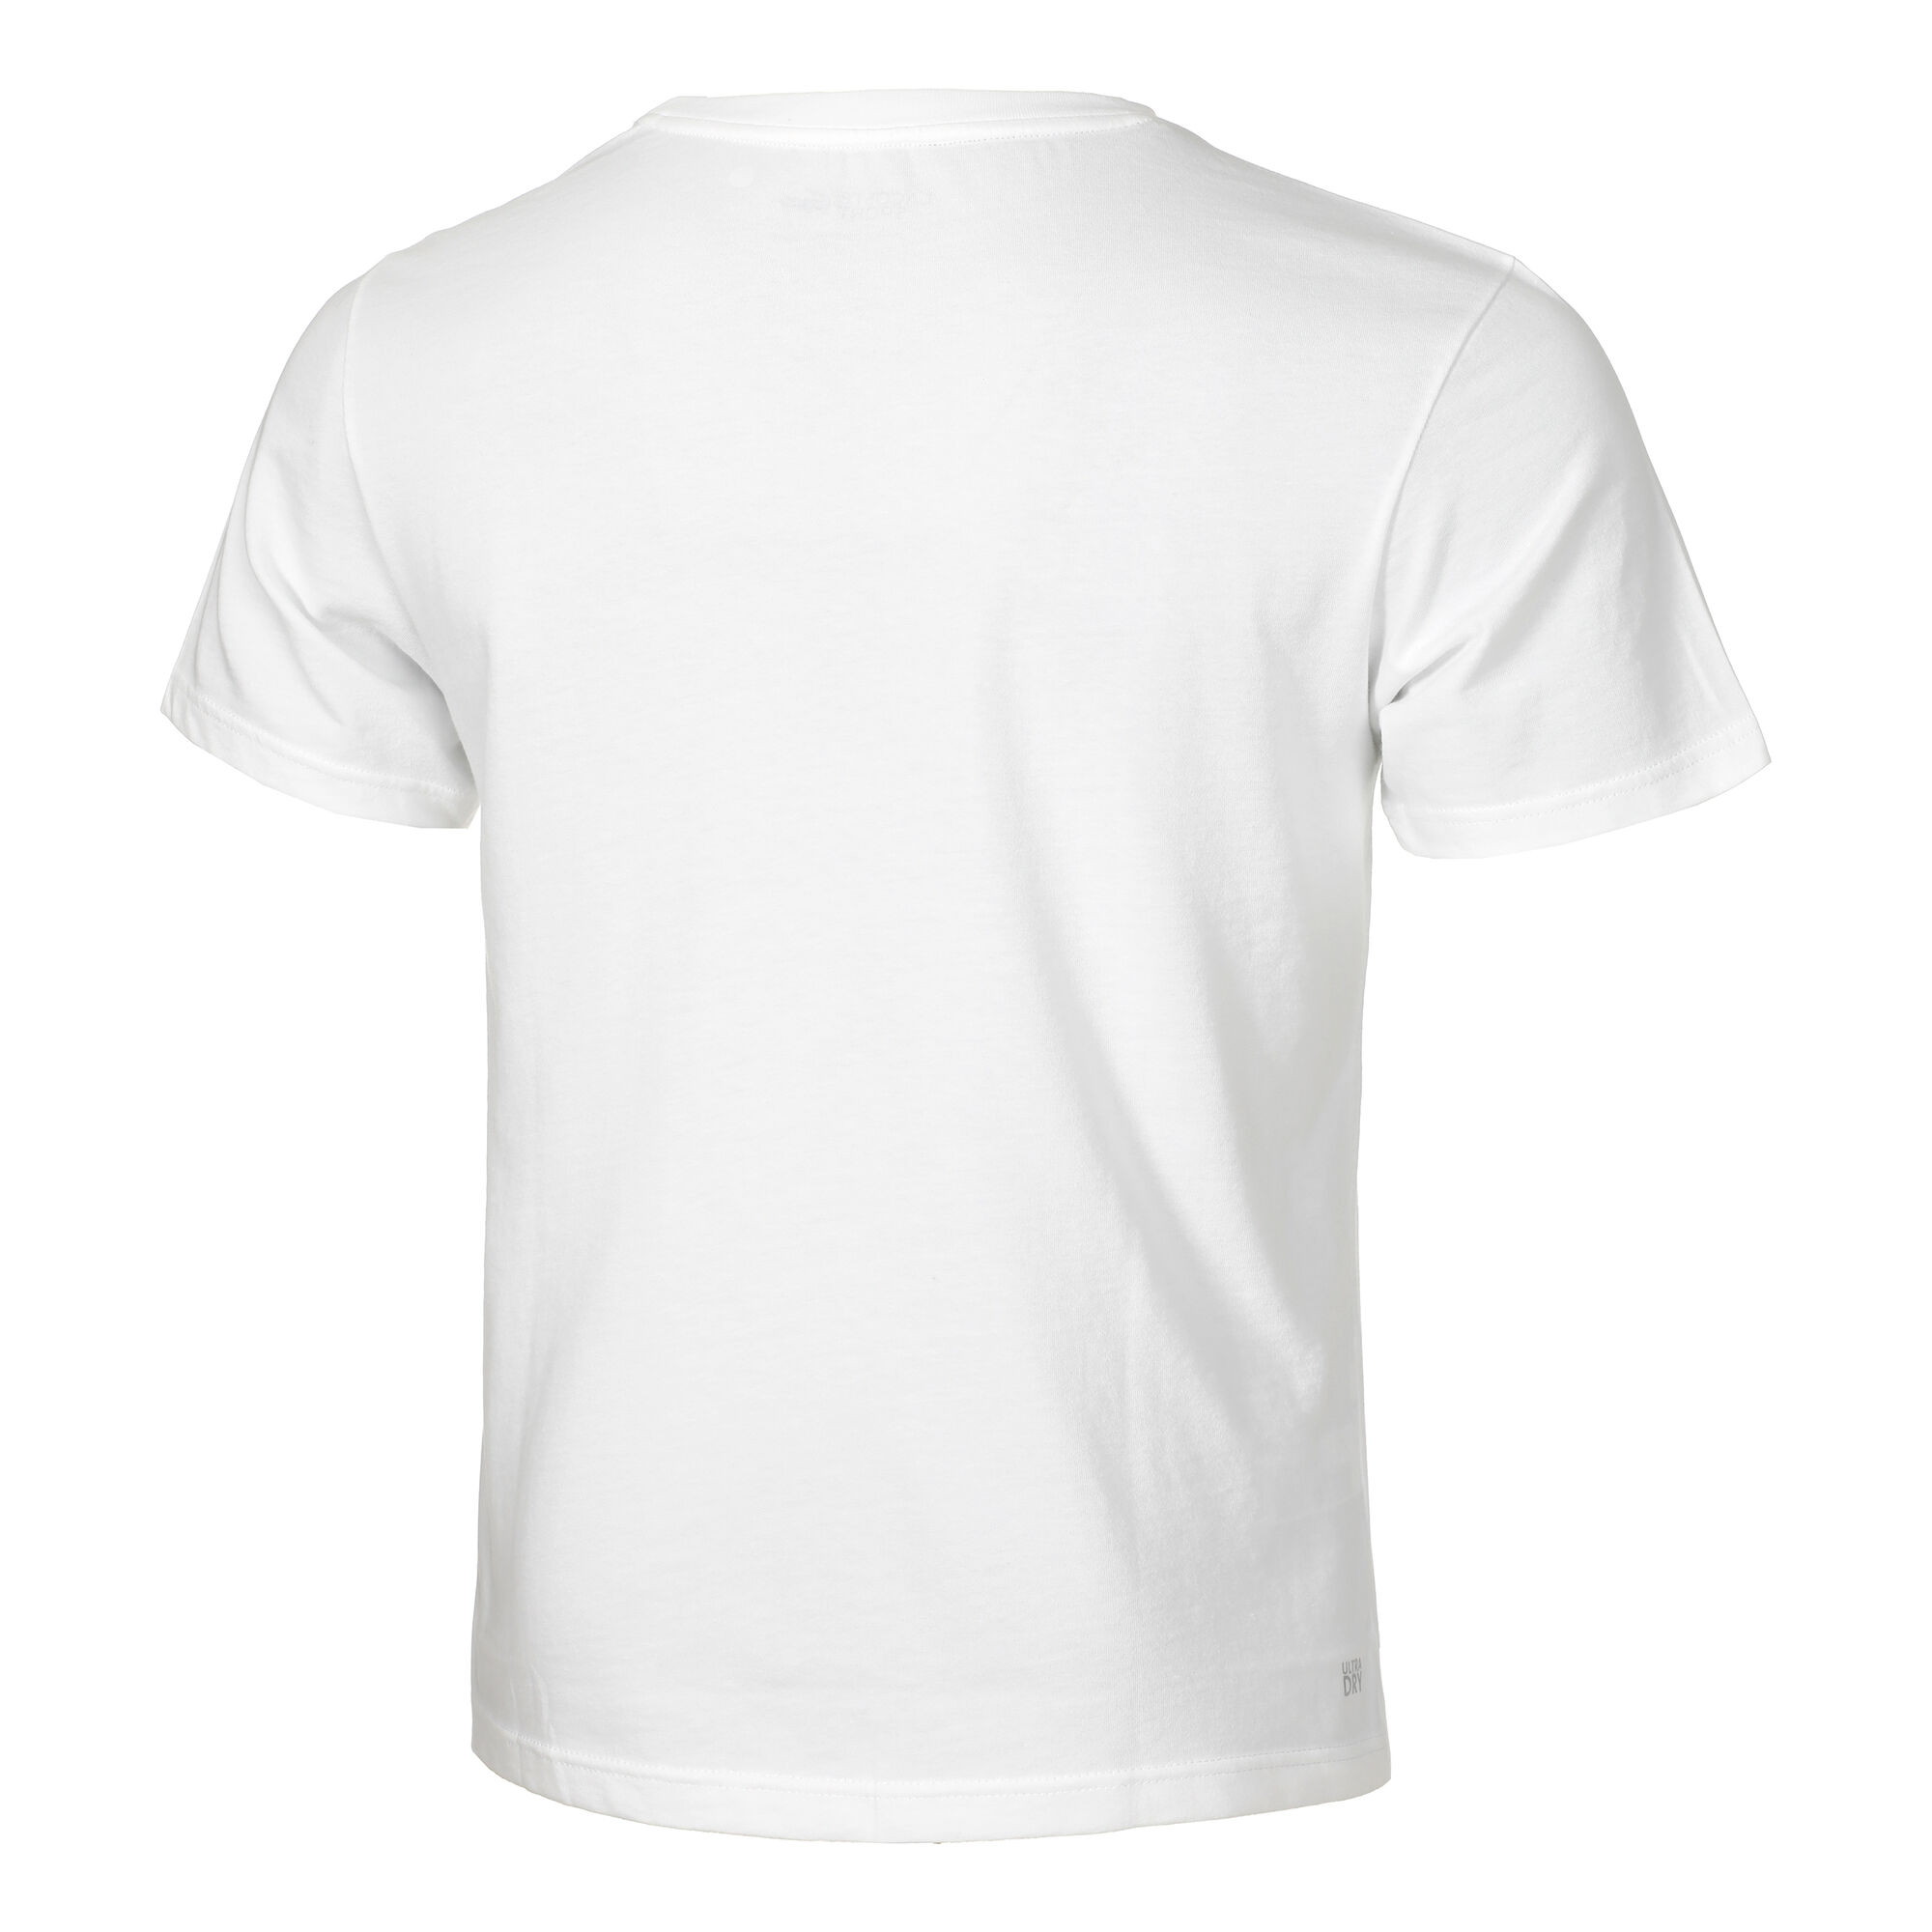 T-shirt blanc homme grande taille - DistriCenter